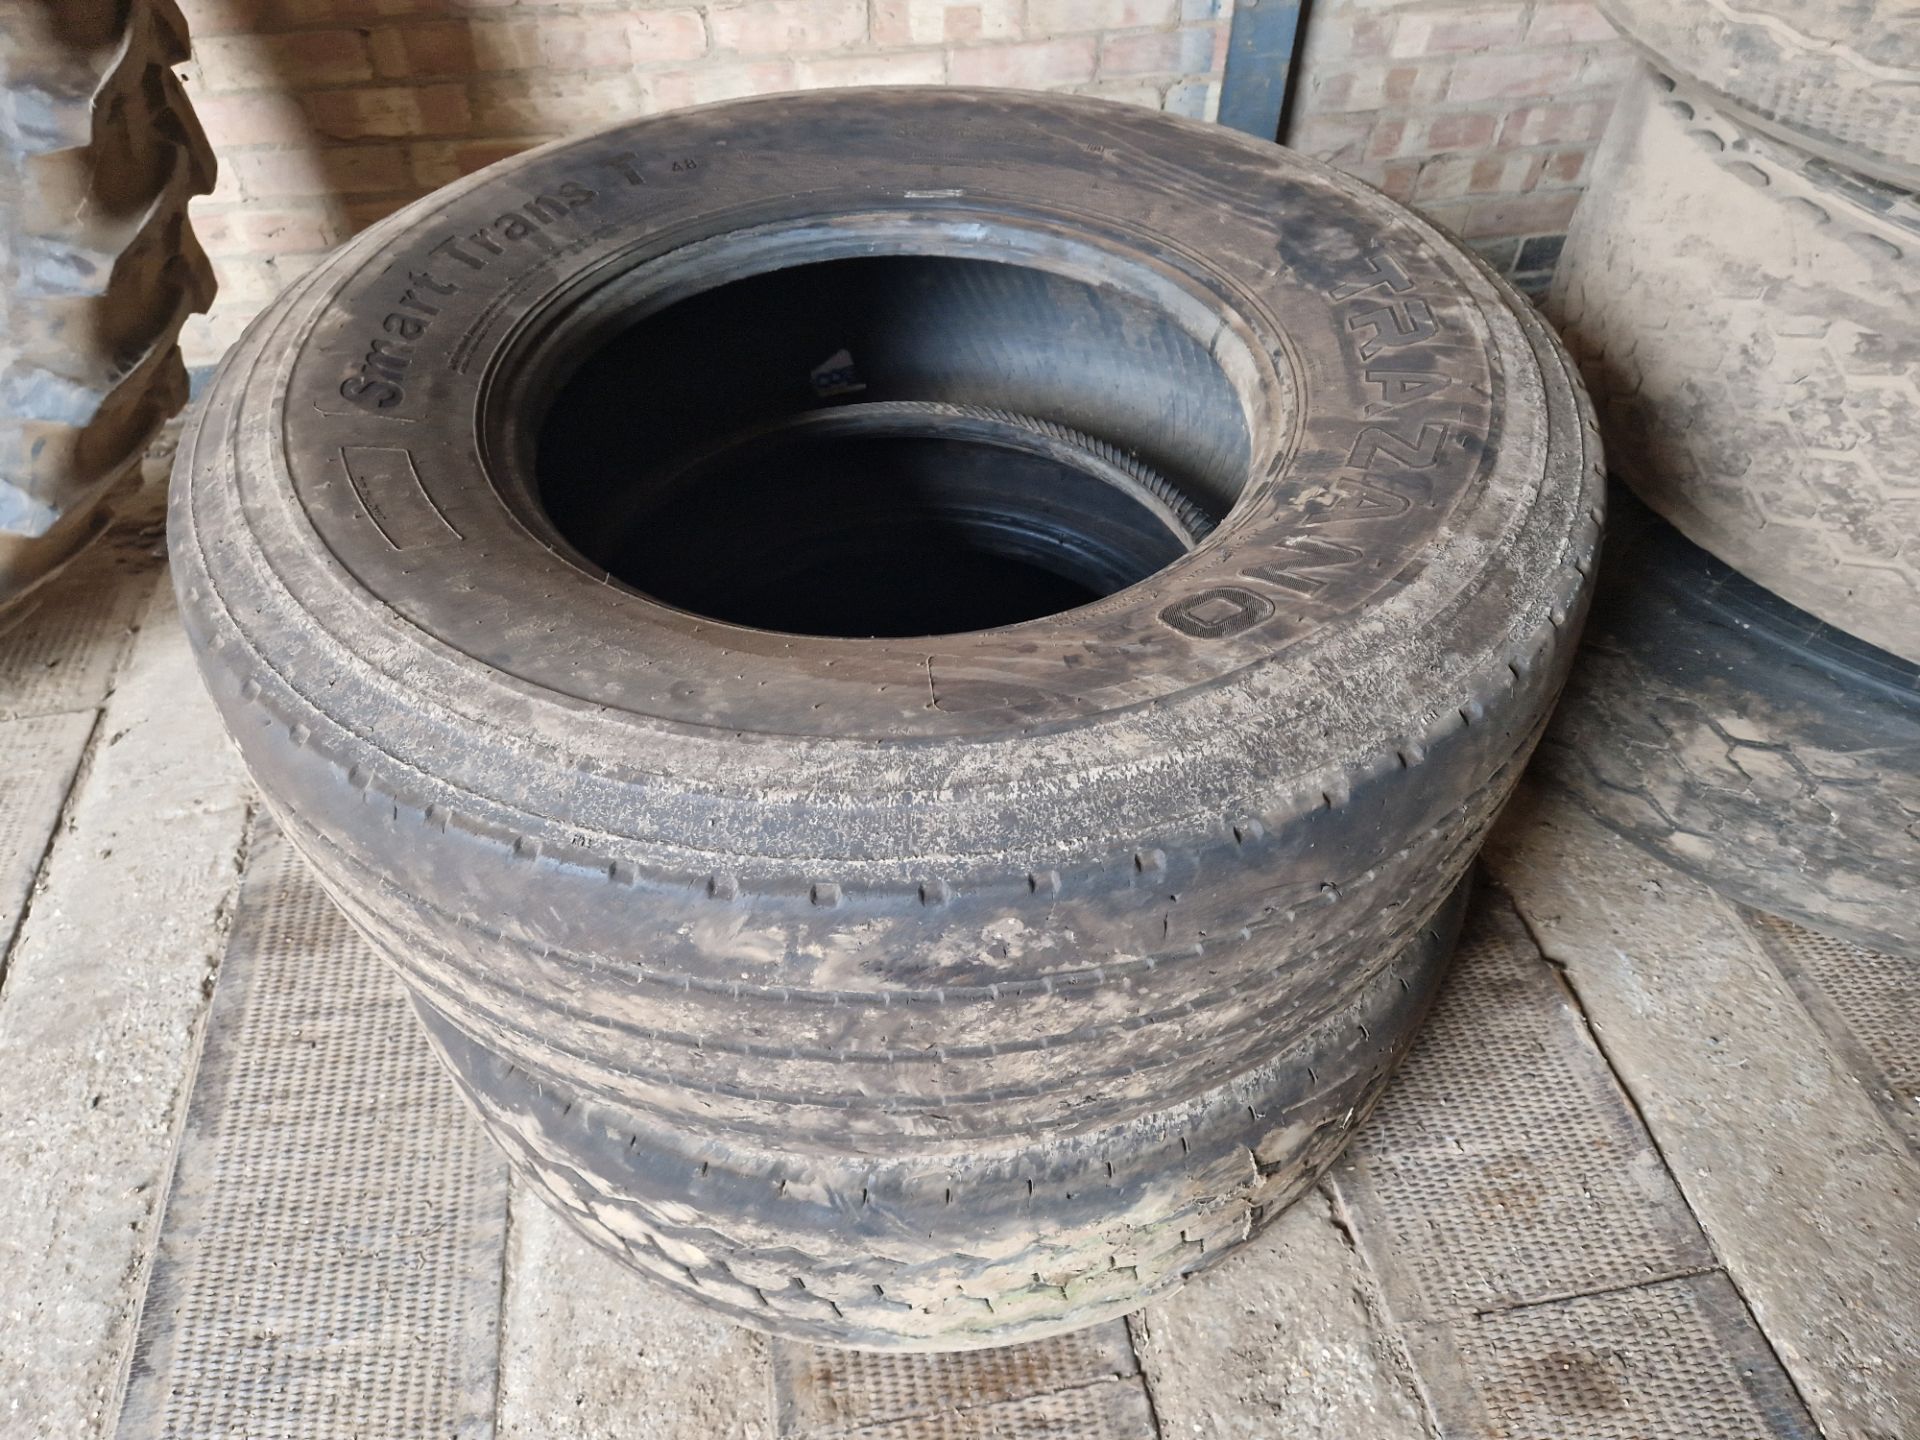 Pair of Trazano 385/65 R22.5 tyres